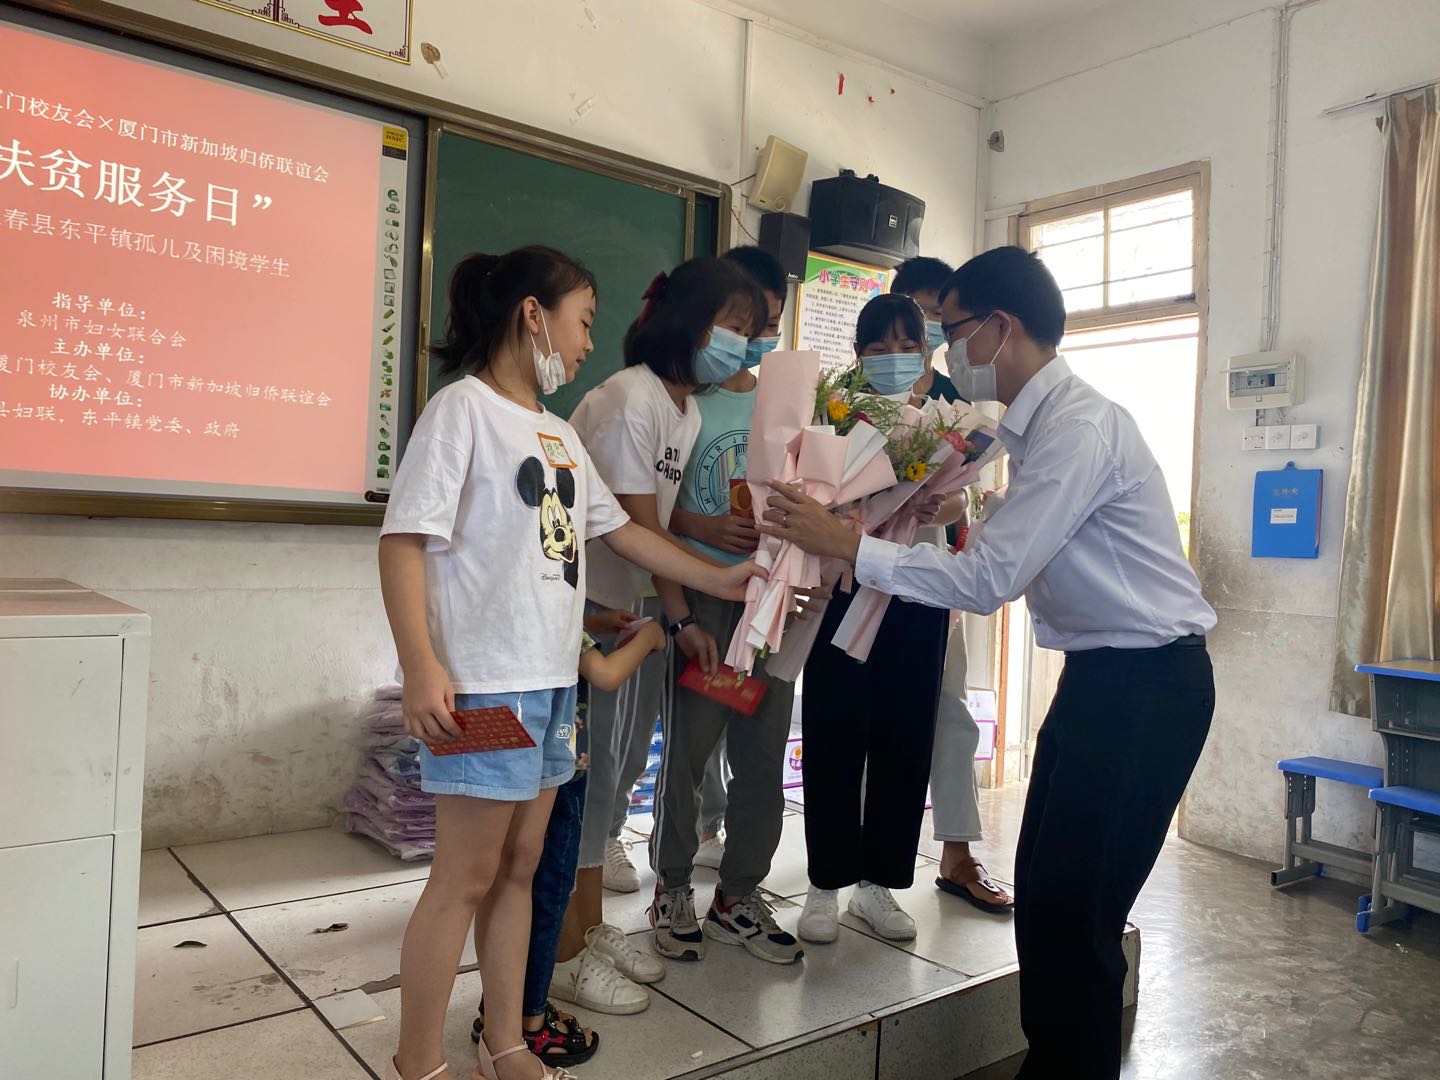 Orphanage support at Yong Chun county